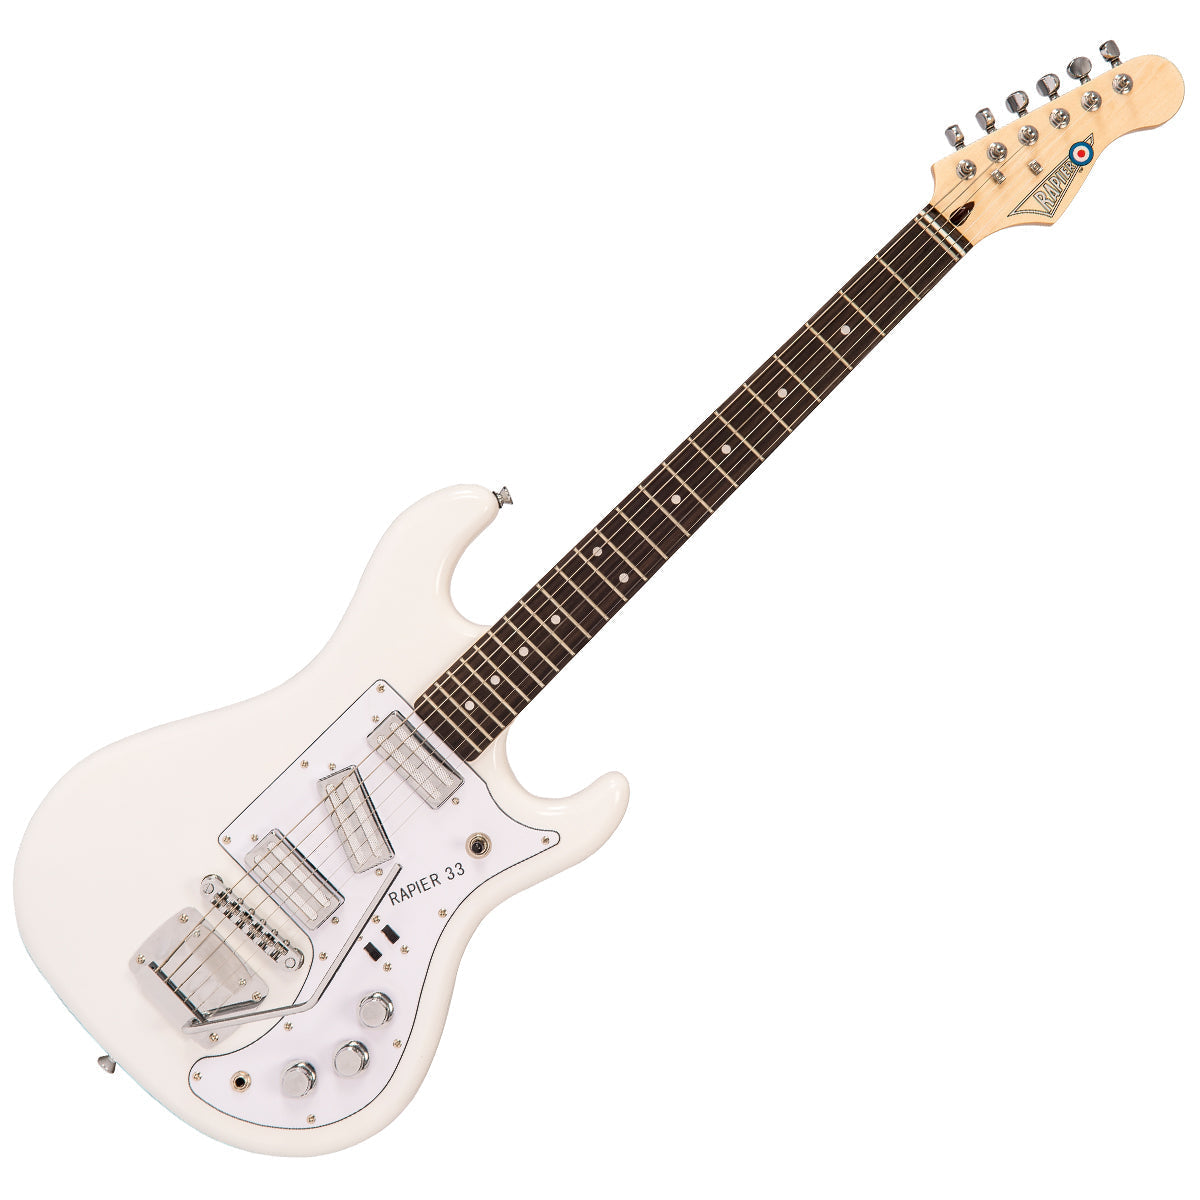 Rapier 33 Electric Guitar ~ Artic White, Electric Guitar for sale at Richards Guitars.